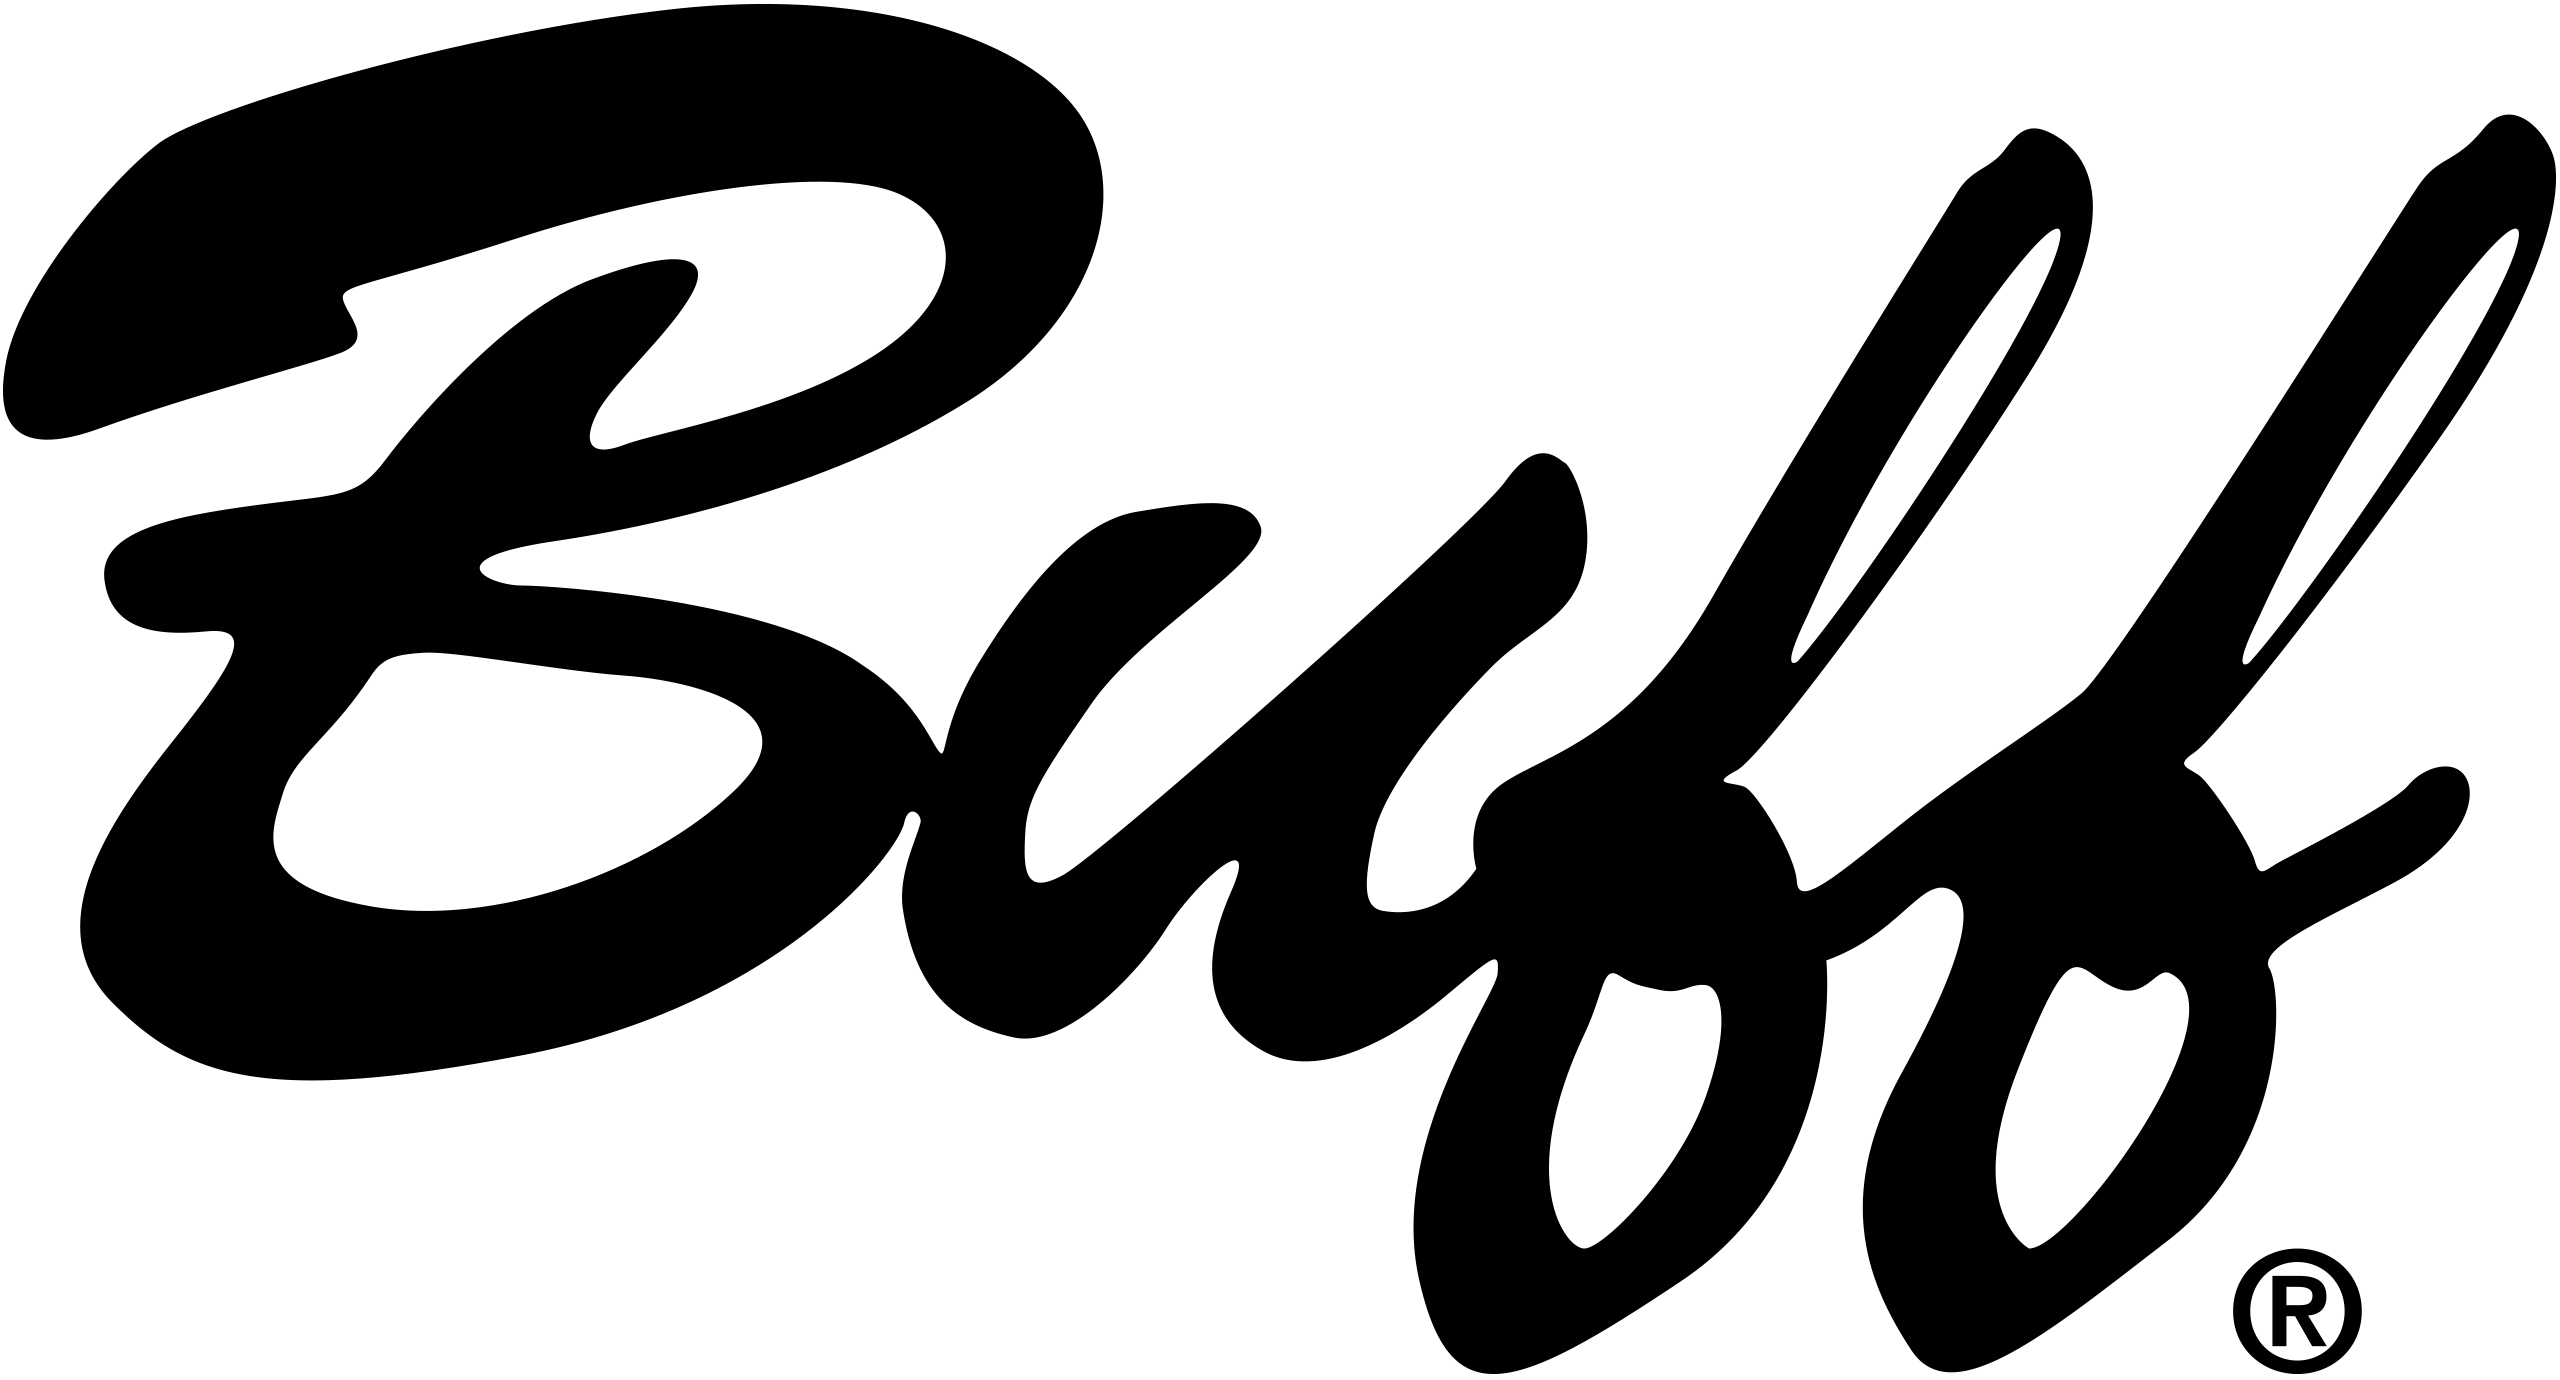 BUFF Registered Logo Black website